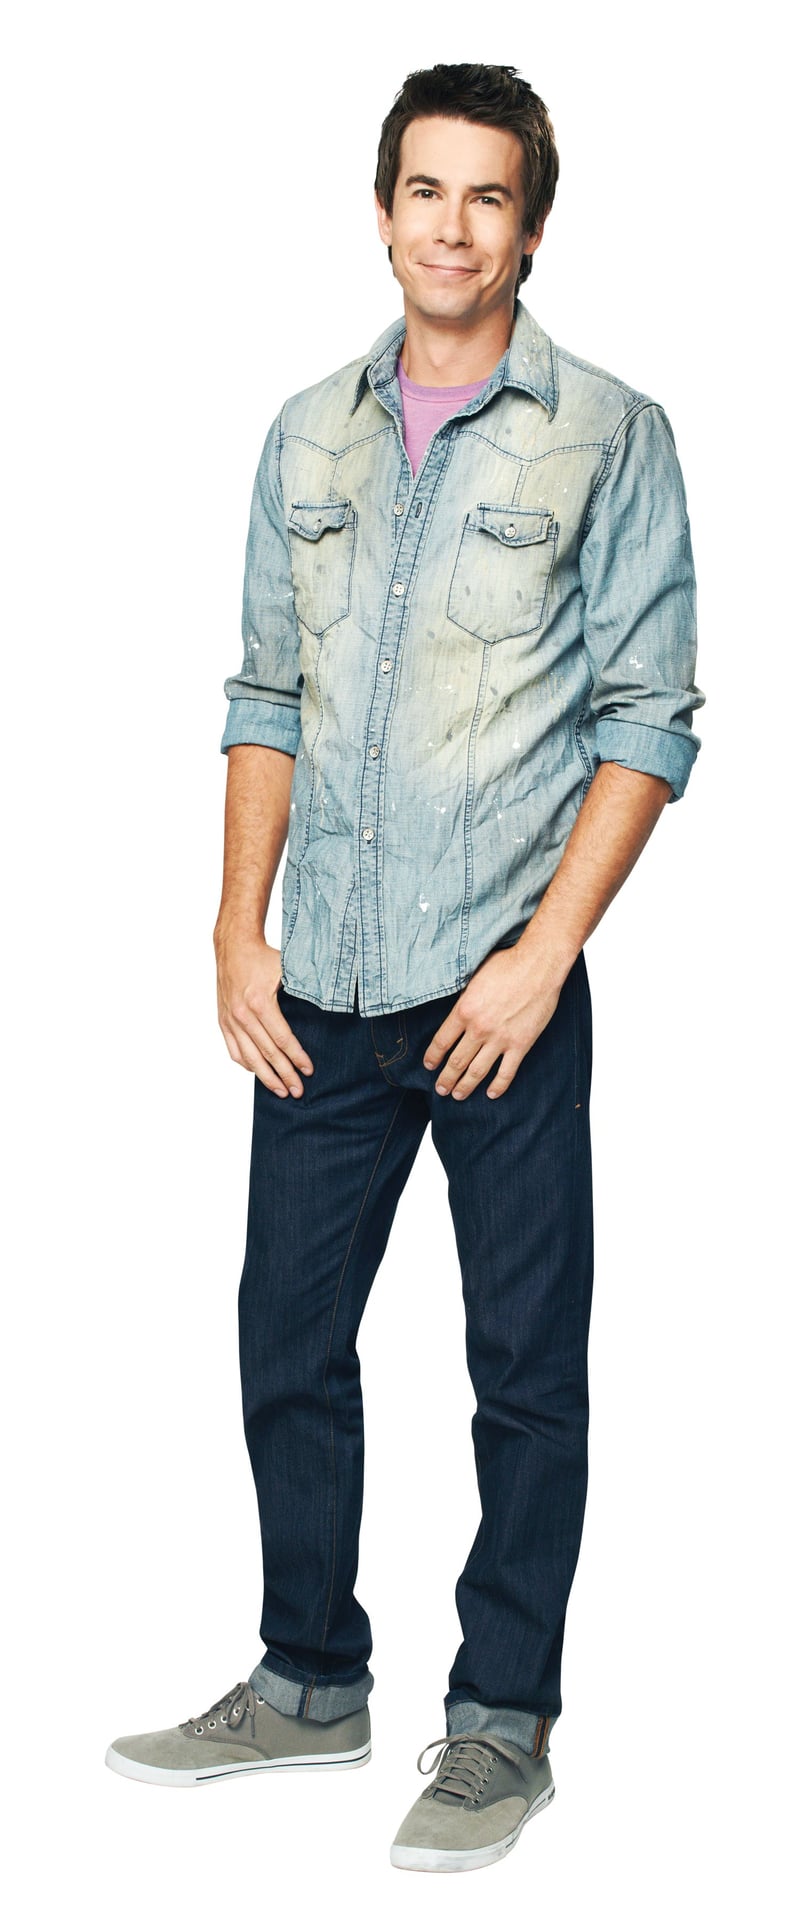 Jerry Trainor as Spencer Shay